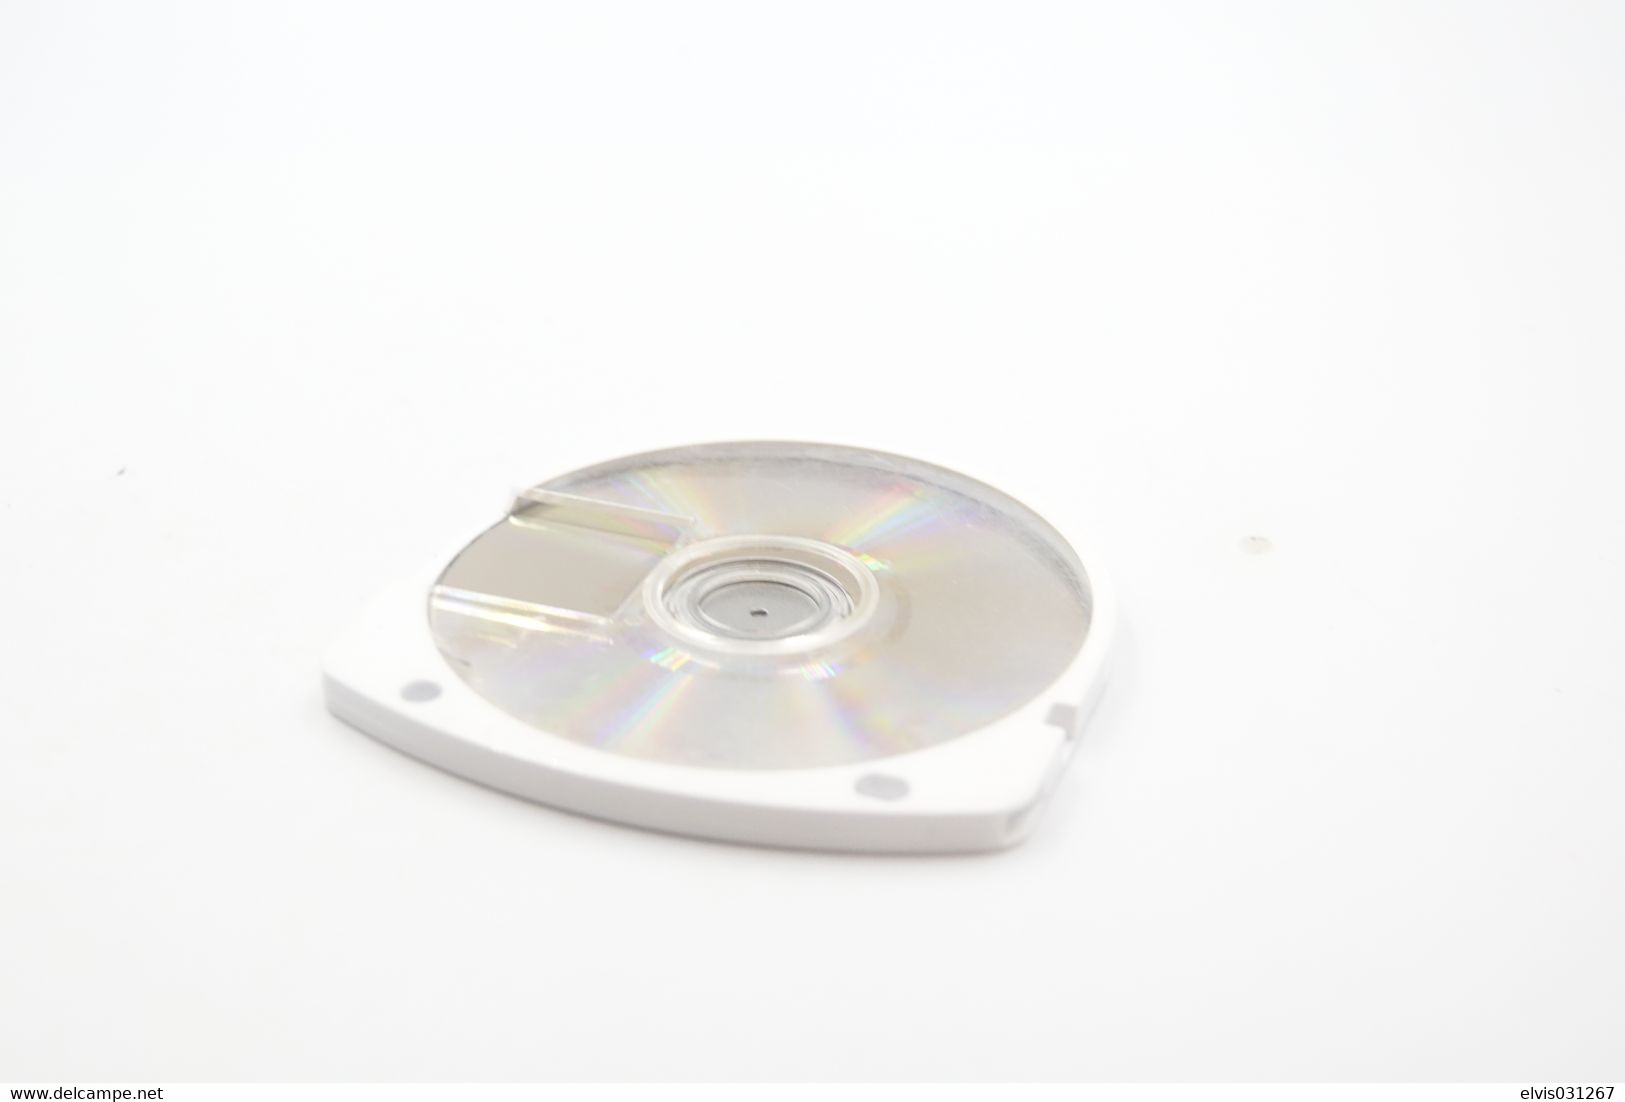 SONY PLAYSTATION PORTABLE PSP : WHITE CHICKS THE MOVIE - PSP